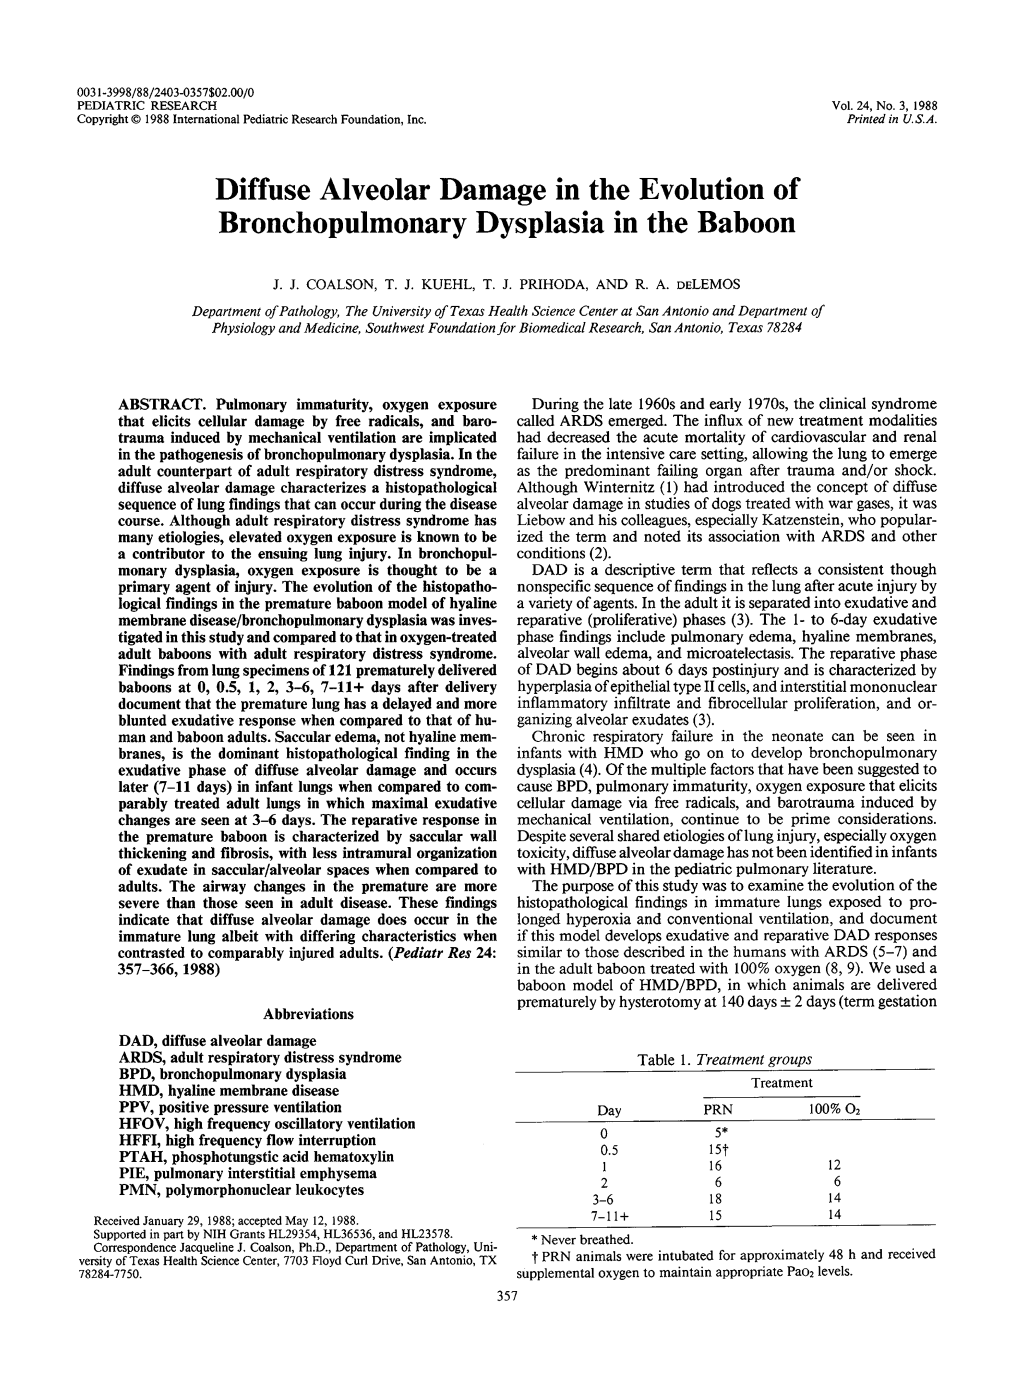 Diffuse Alveolar Damage in the Evolution of Bronchopulmonary Dysplasia in the Baboon